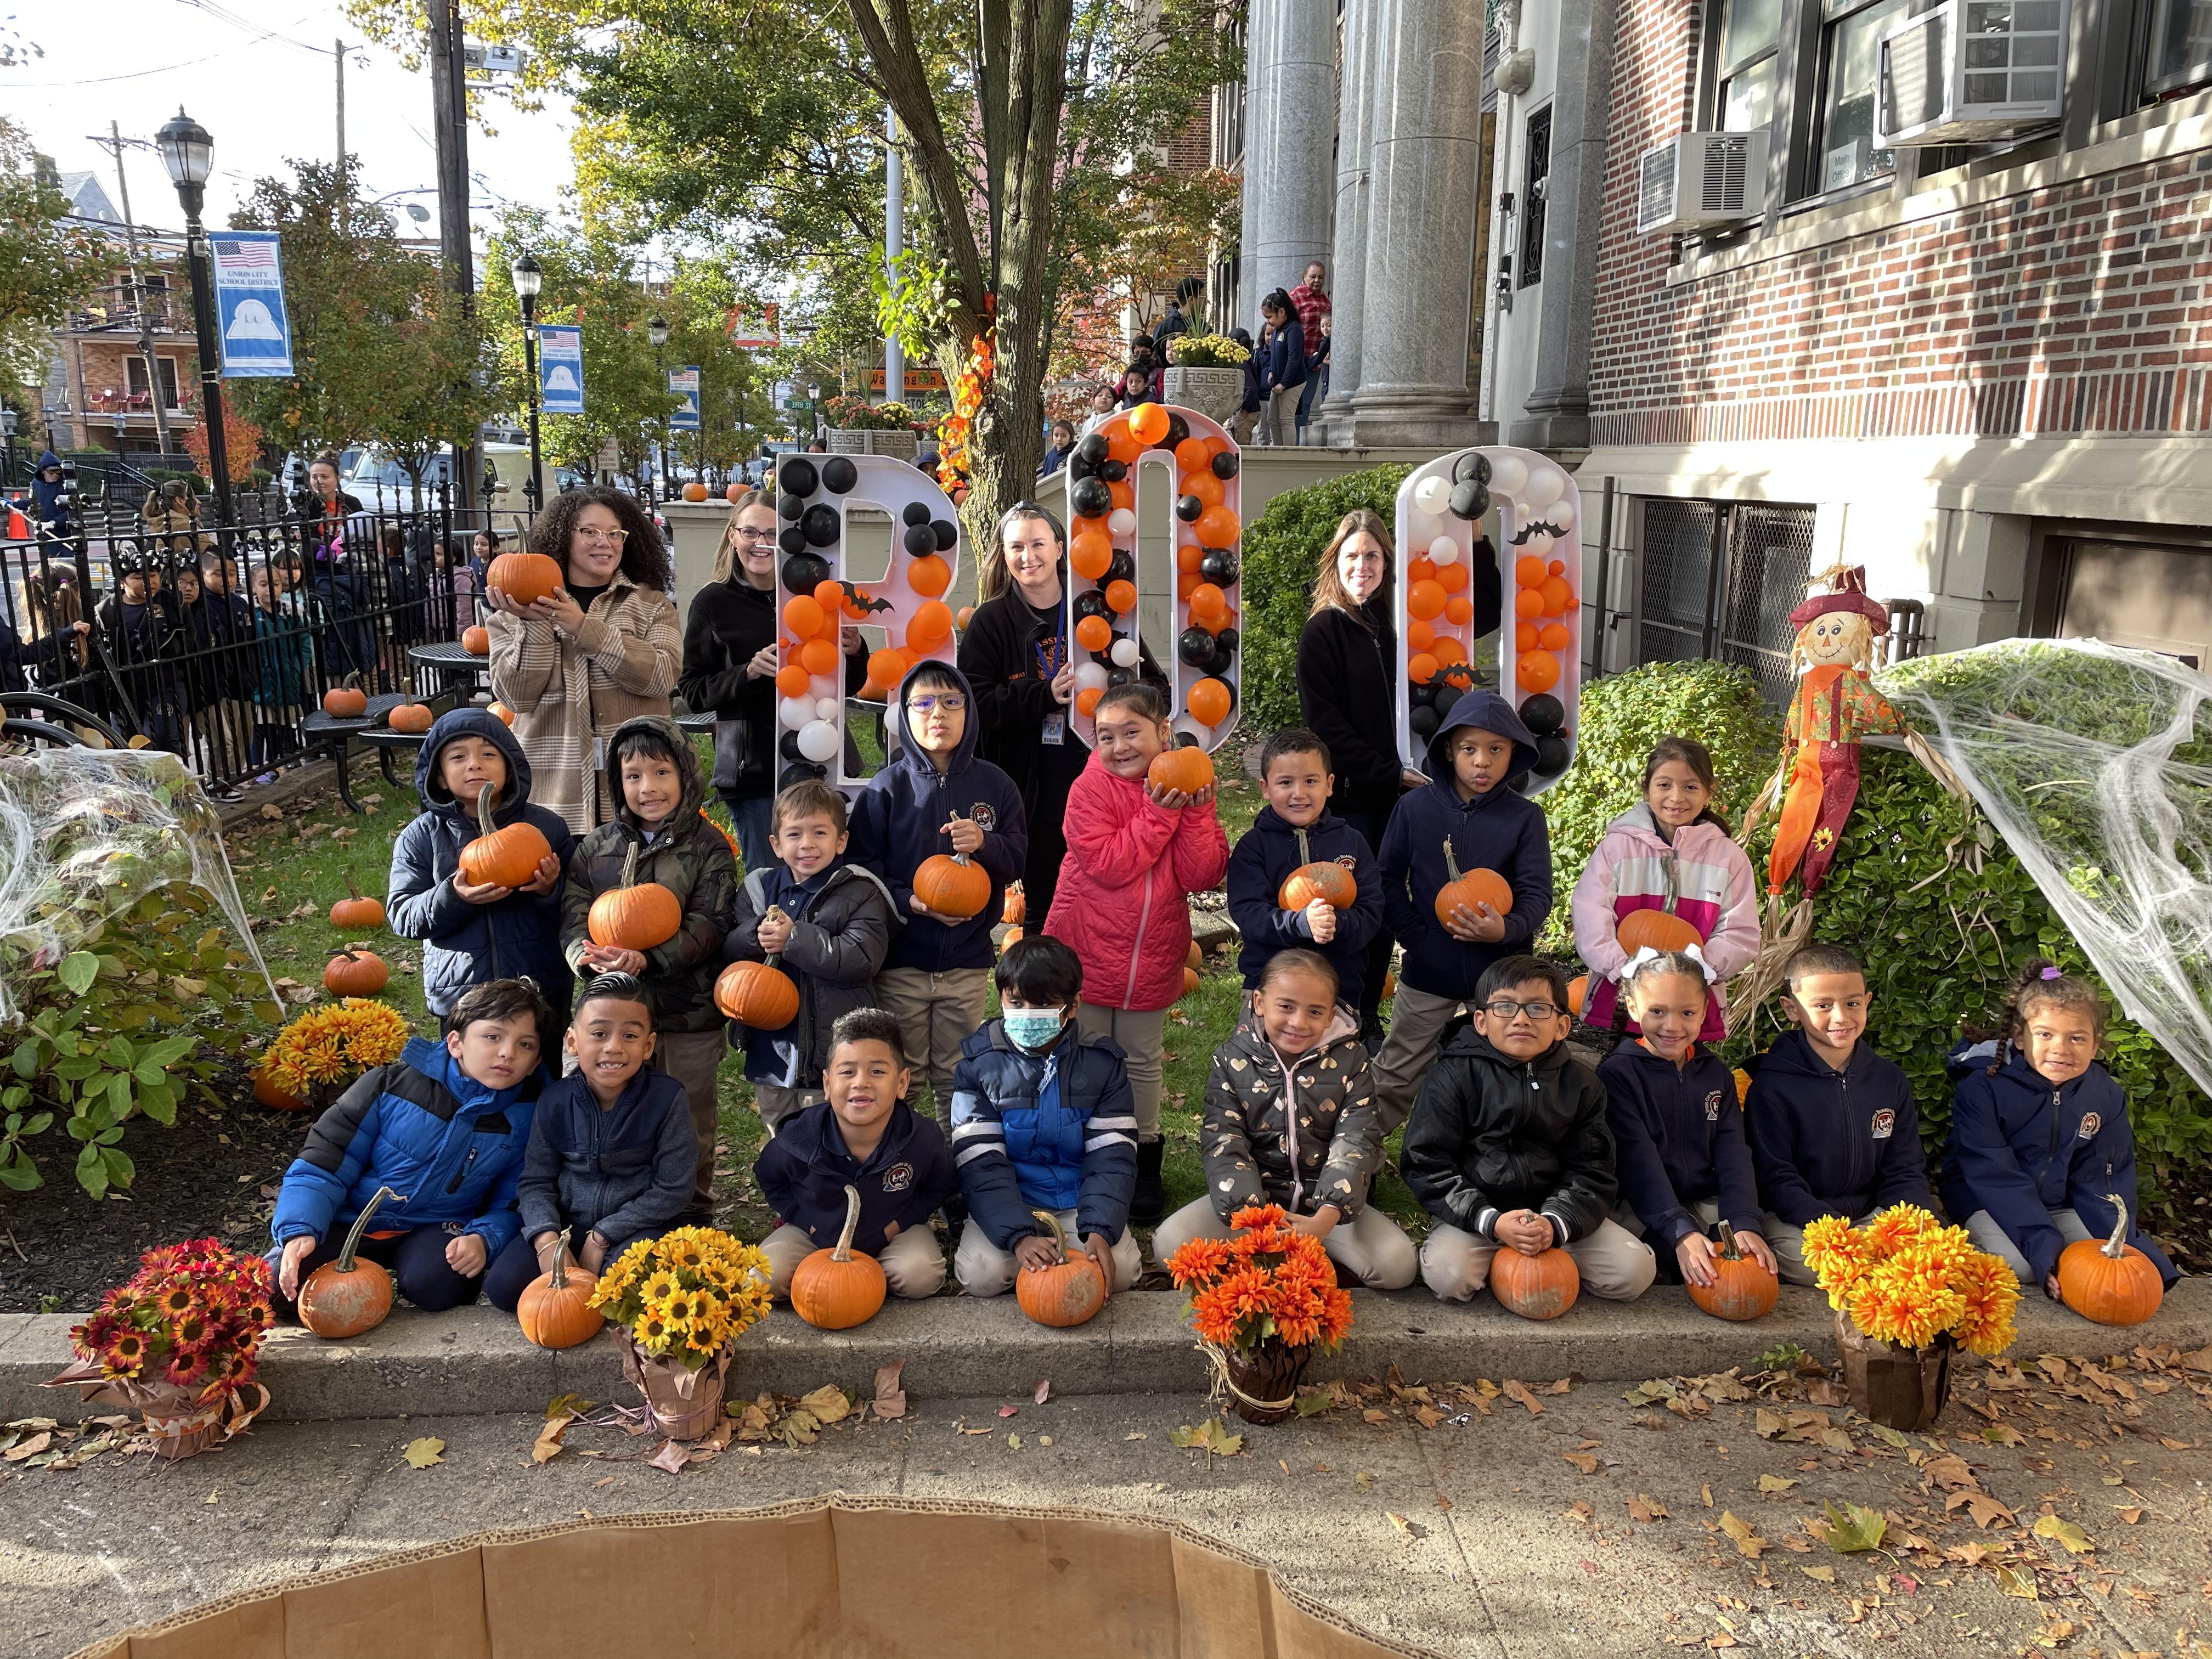 Washington School students enjoying pumpkins